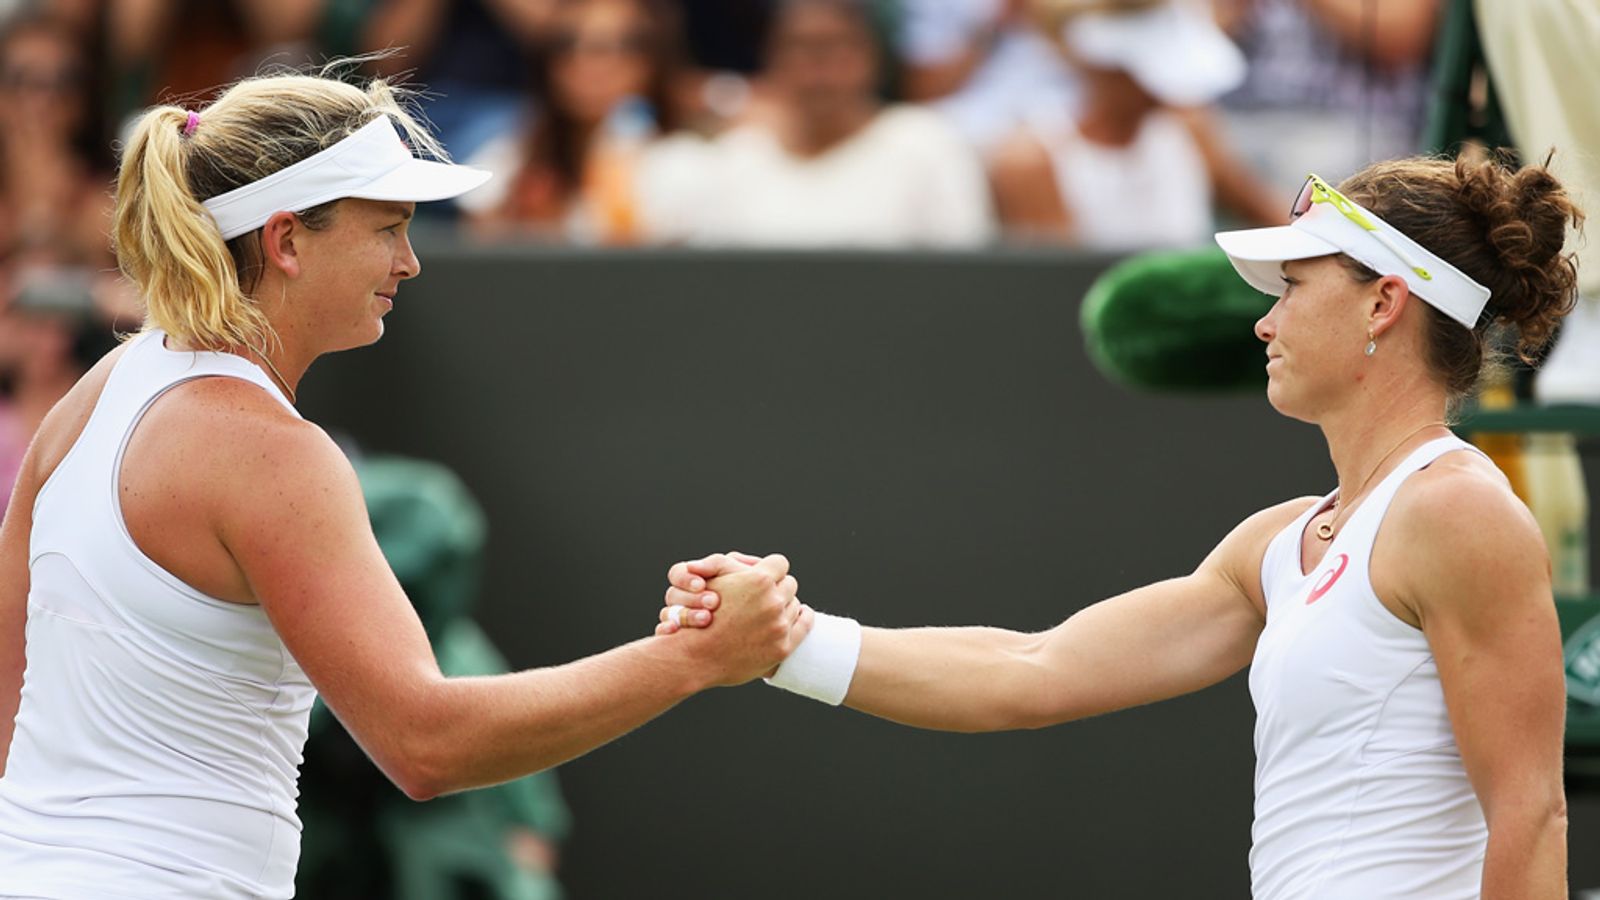 Maria Sharapova through to Wimbledon's last 16 with straight sets win